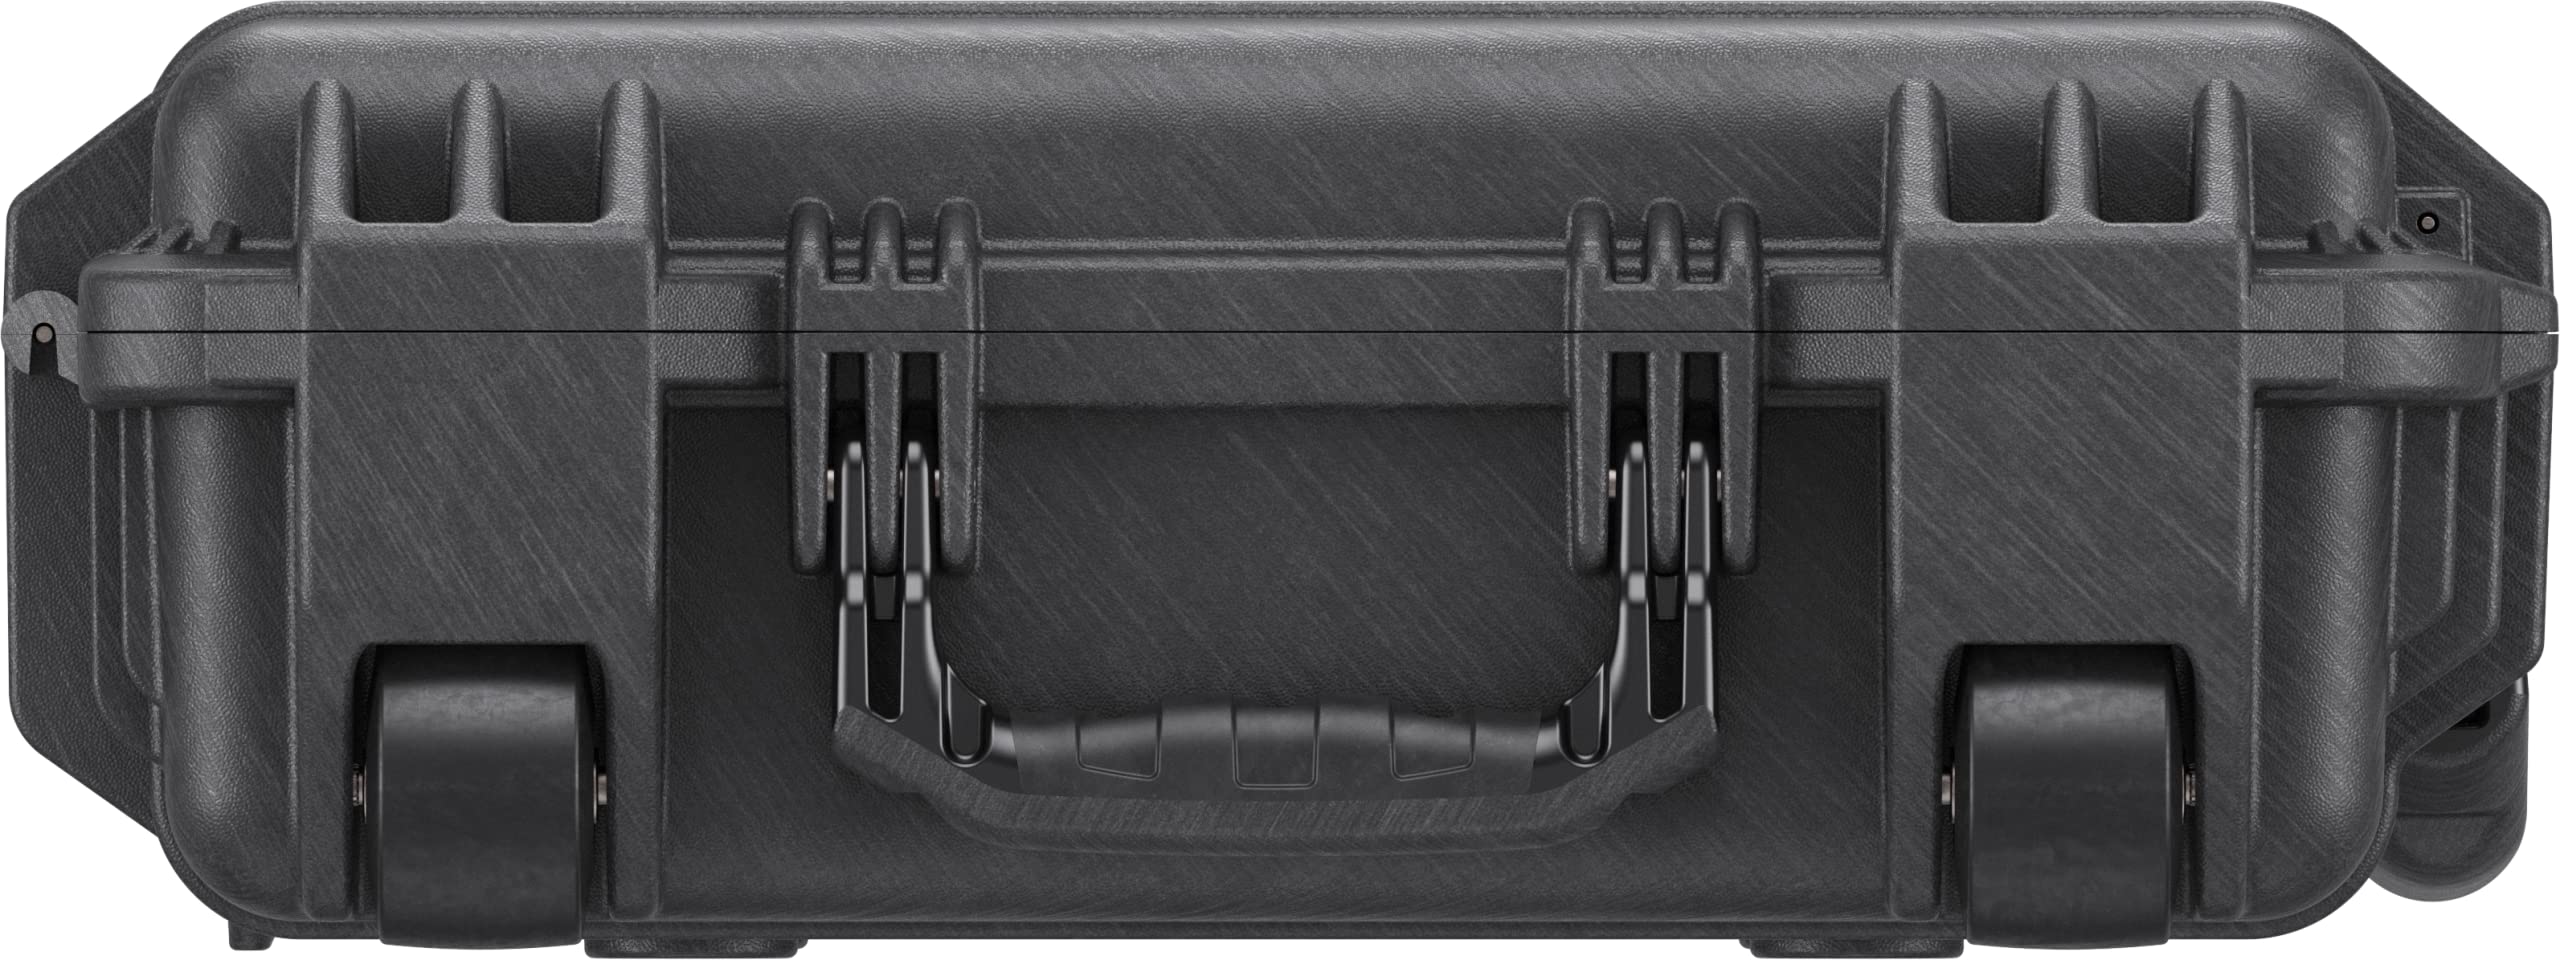 Pelican Protector 1700 Long Case - Multi-Purpose Hard Case with Foam - Tripod, Camera Equipment, Sportsmans Gun Case, Electronics Gear, and More (Black)